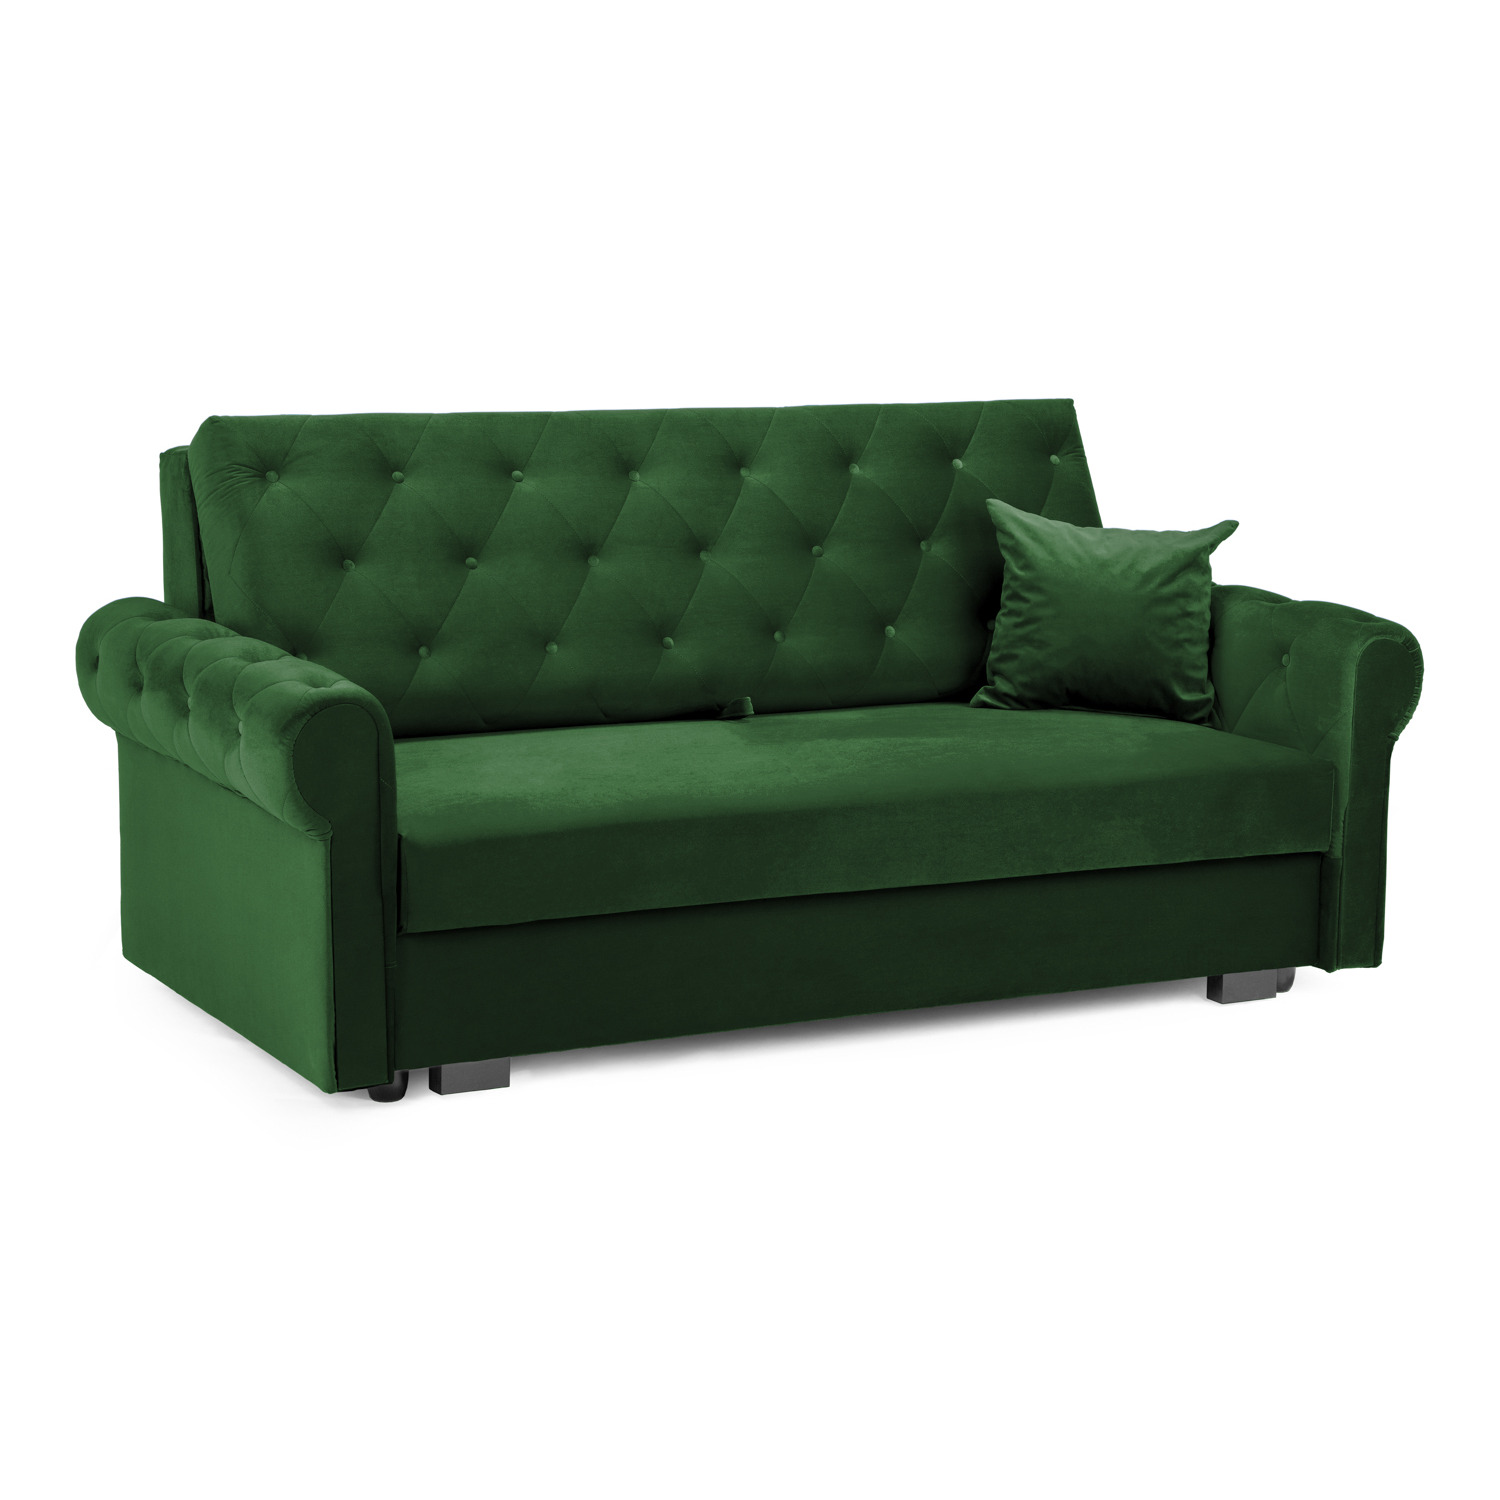 Rosalind Sofabed Plush Green 3 Seater - image 1